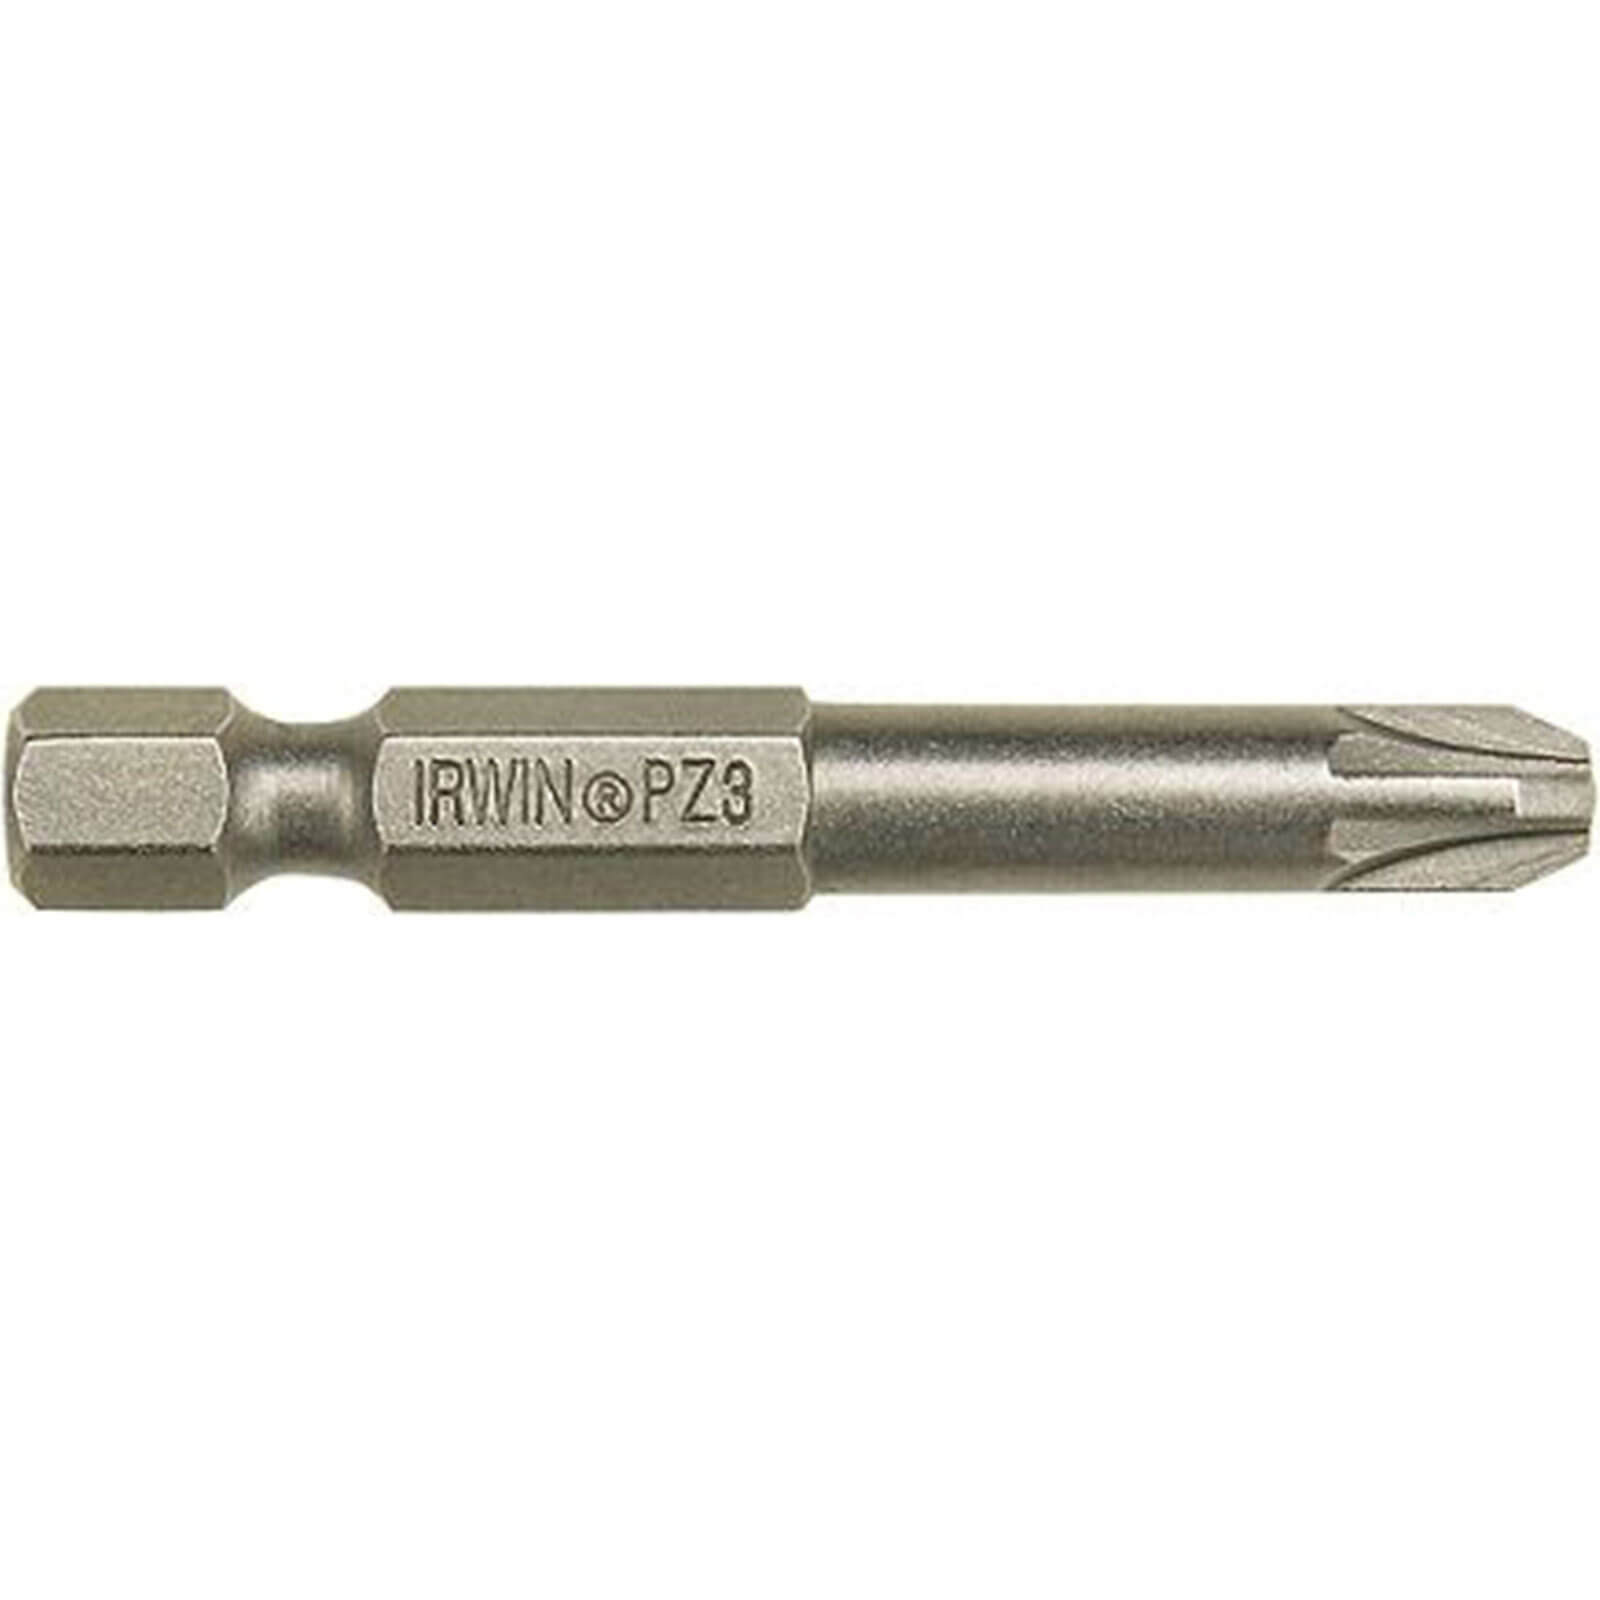 Photo of Irwin Pozi Power Screwdriver Bit Pz2 90mm Pack Of 1